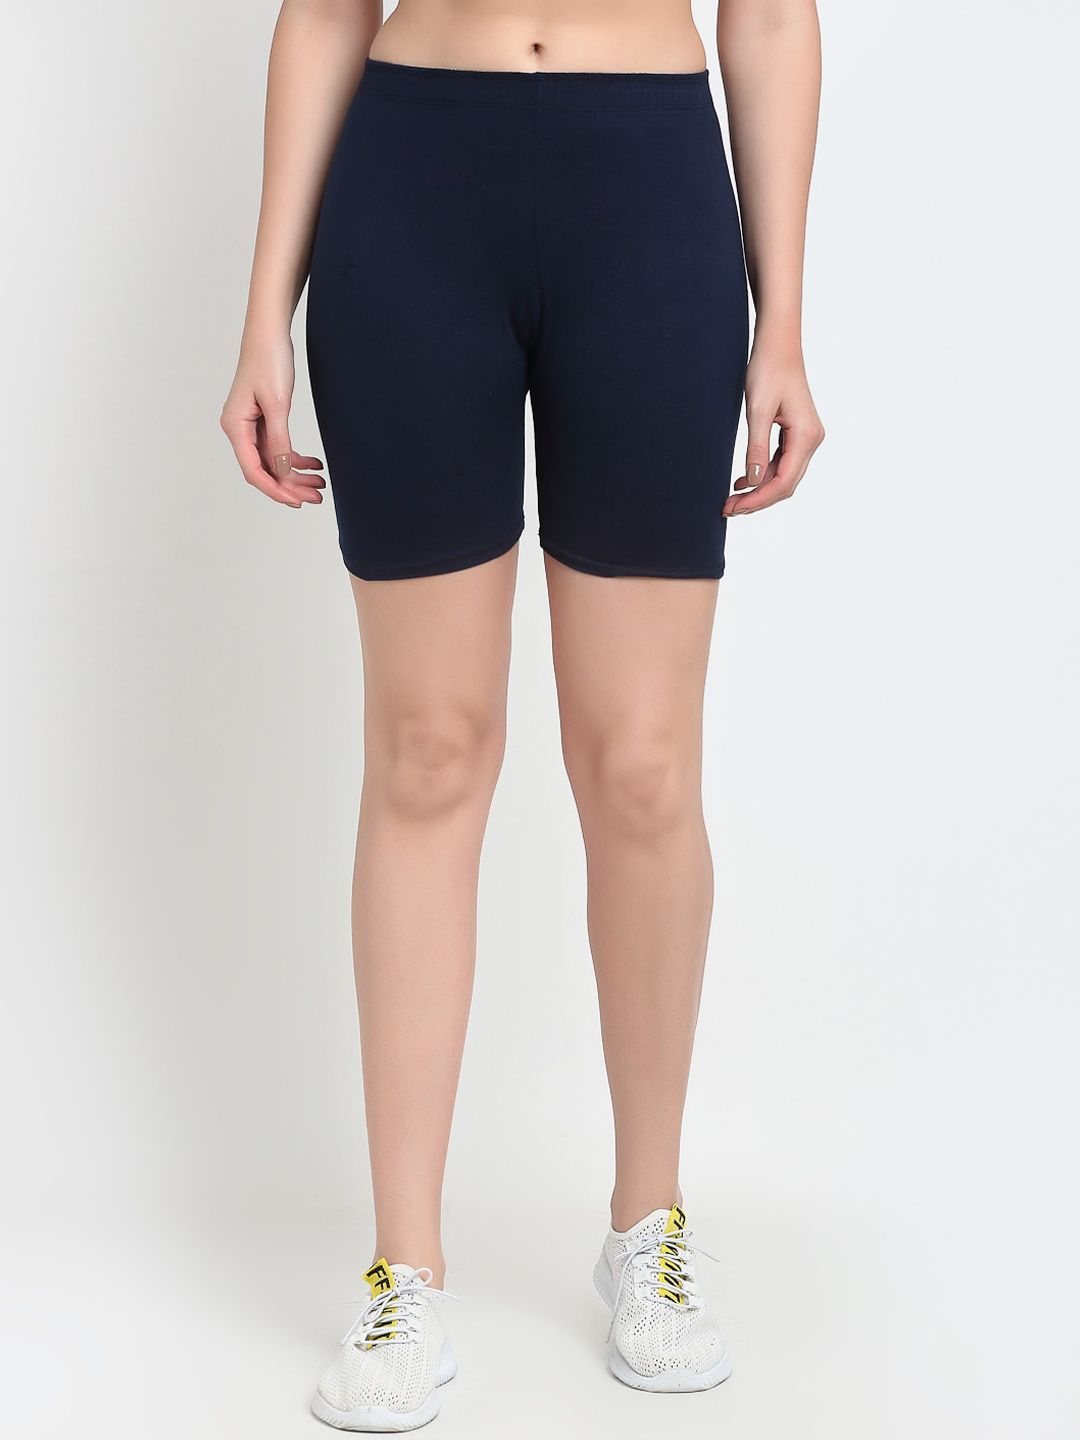 GRACIT Women Navy Blue Solid Biker Shorts Price in India